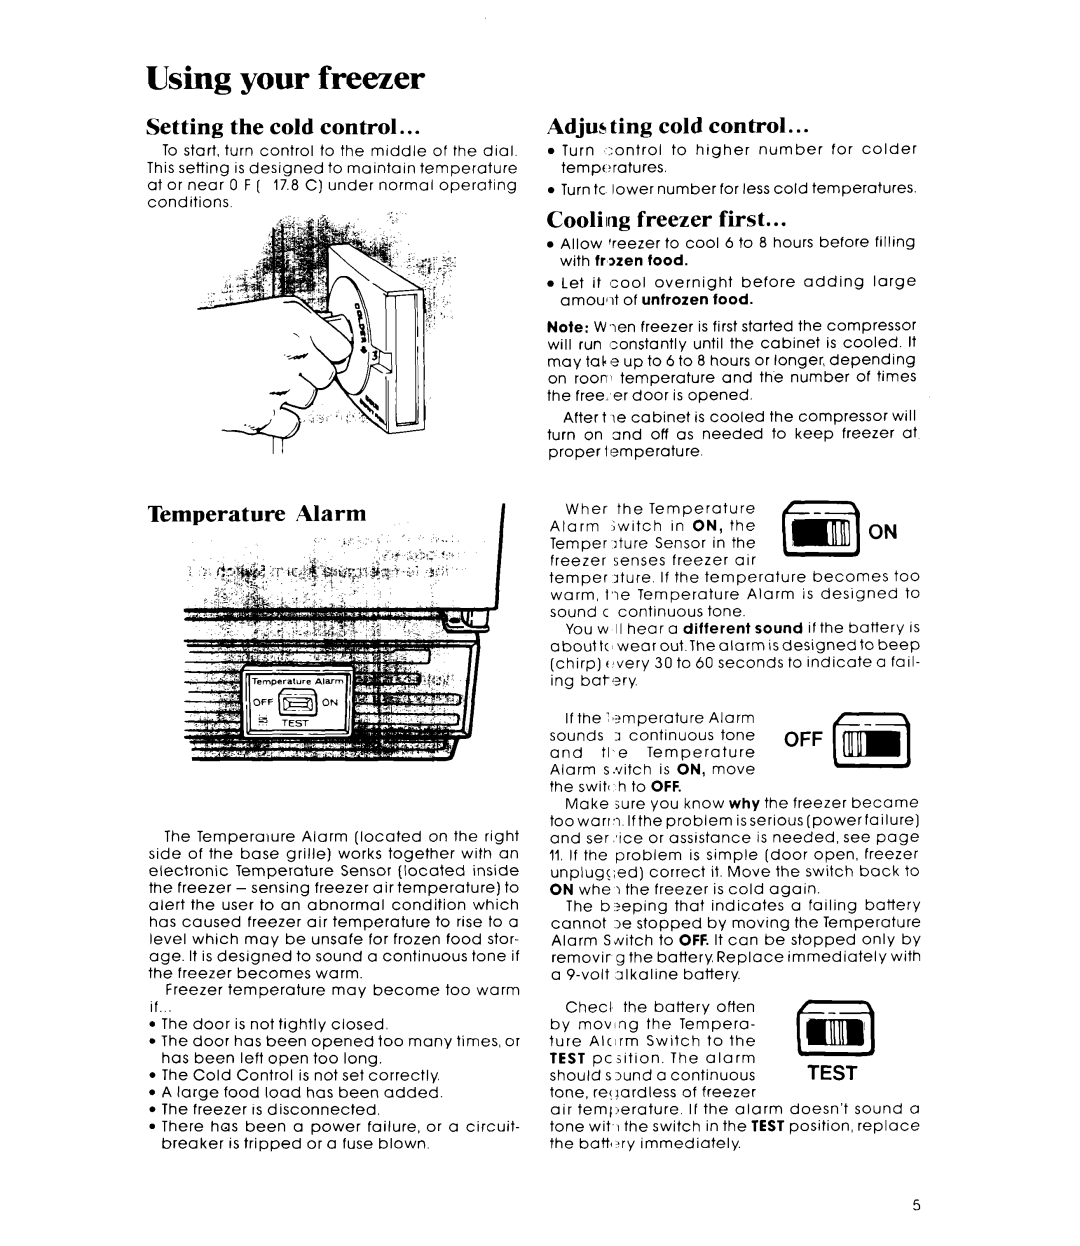 Whirlpool EV20VS manual your, freezer, Using, Setting, Temperature Alarm, Adjus ting cold control, lI1I1, Test 